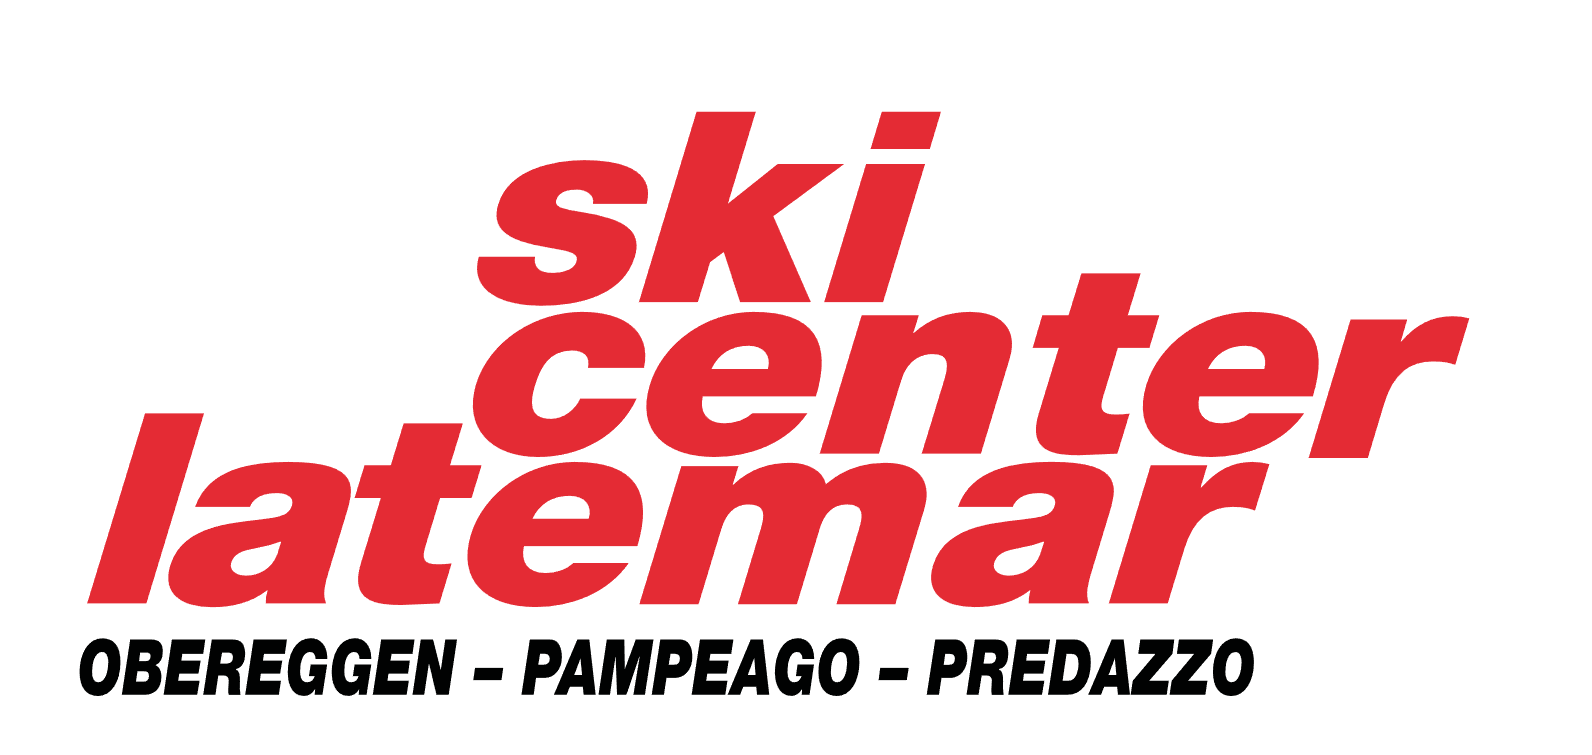 Ski center latemar